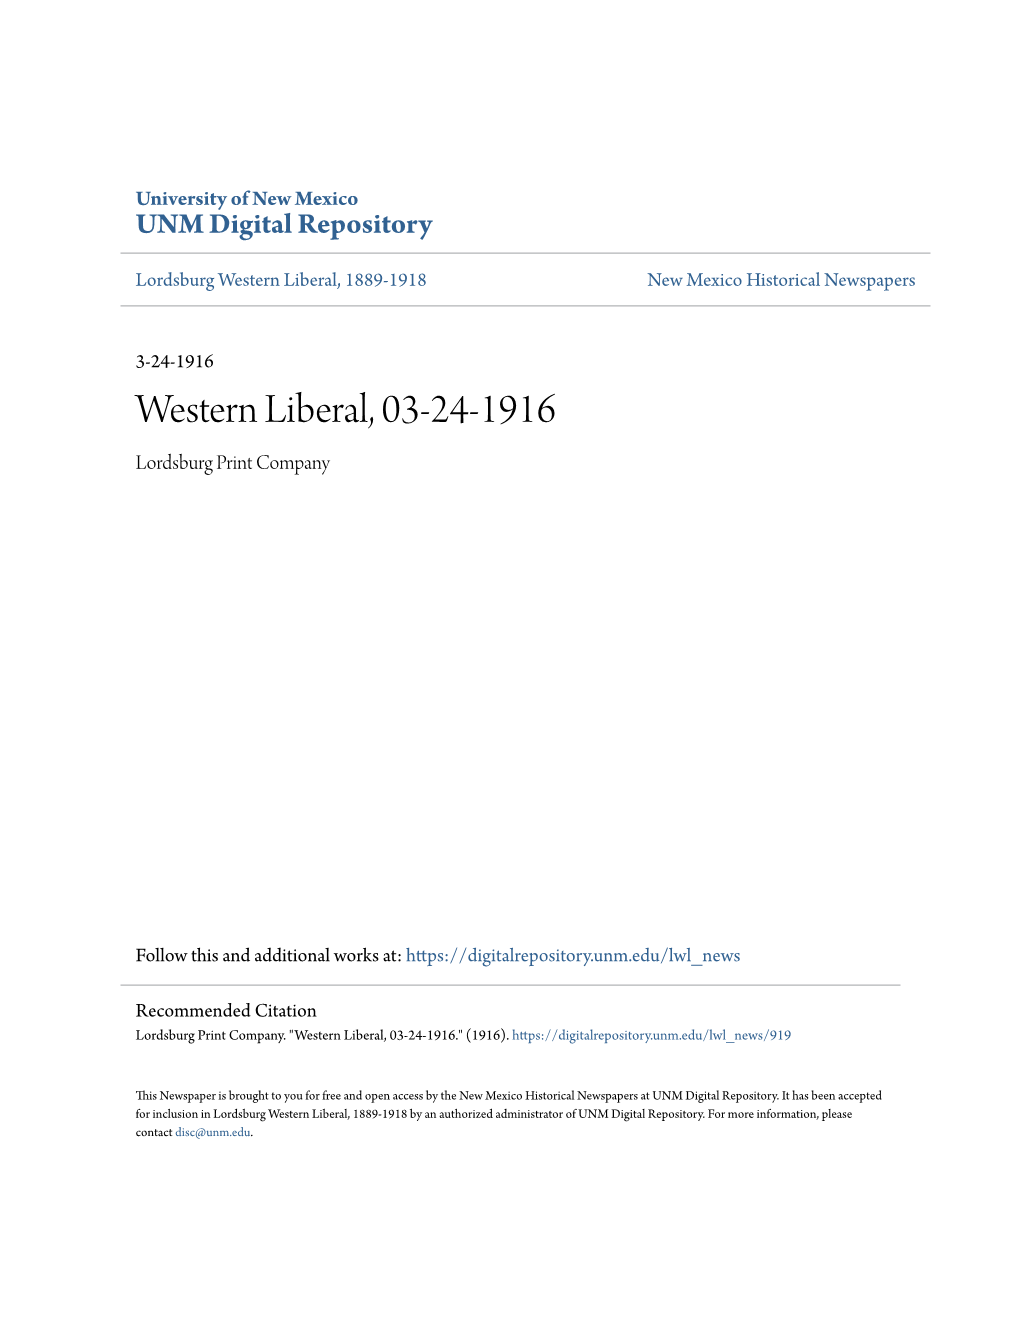 Western Liberal, 03-24-1916 Lordsburg Print Company